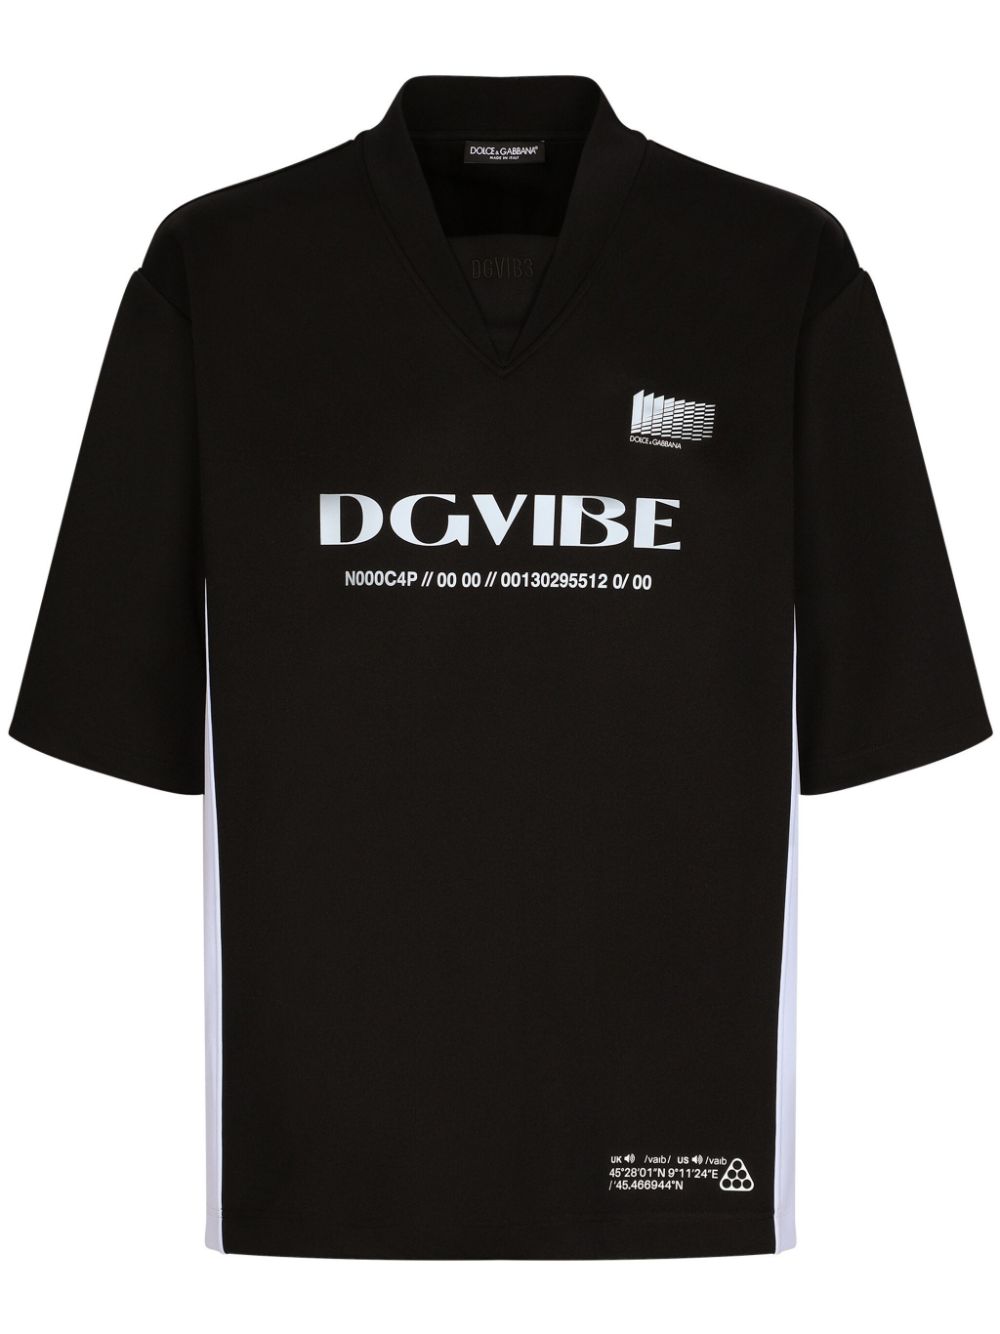 Dolce & Gabbana DGVIB3 logo-print V-neck T-shirt - Black von Dolce & Gabbana DGVIB3